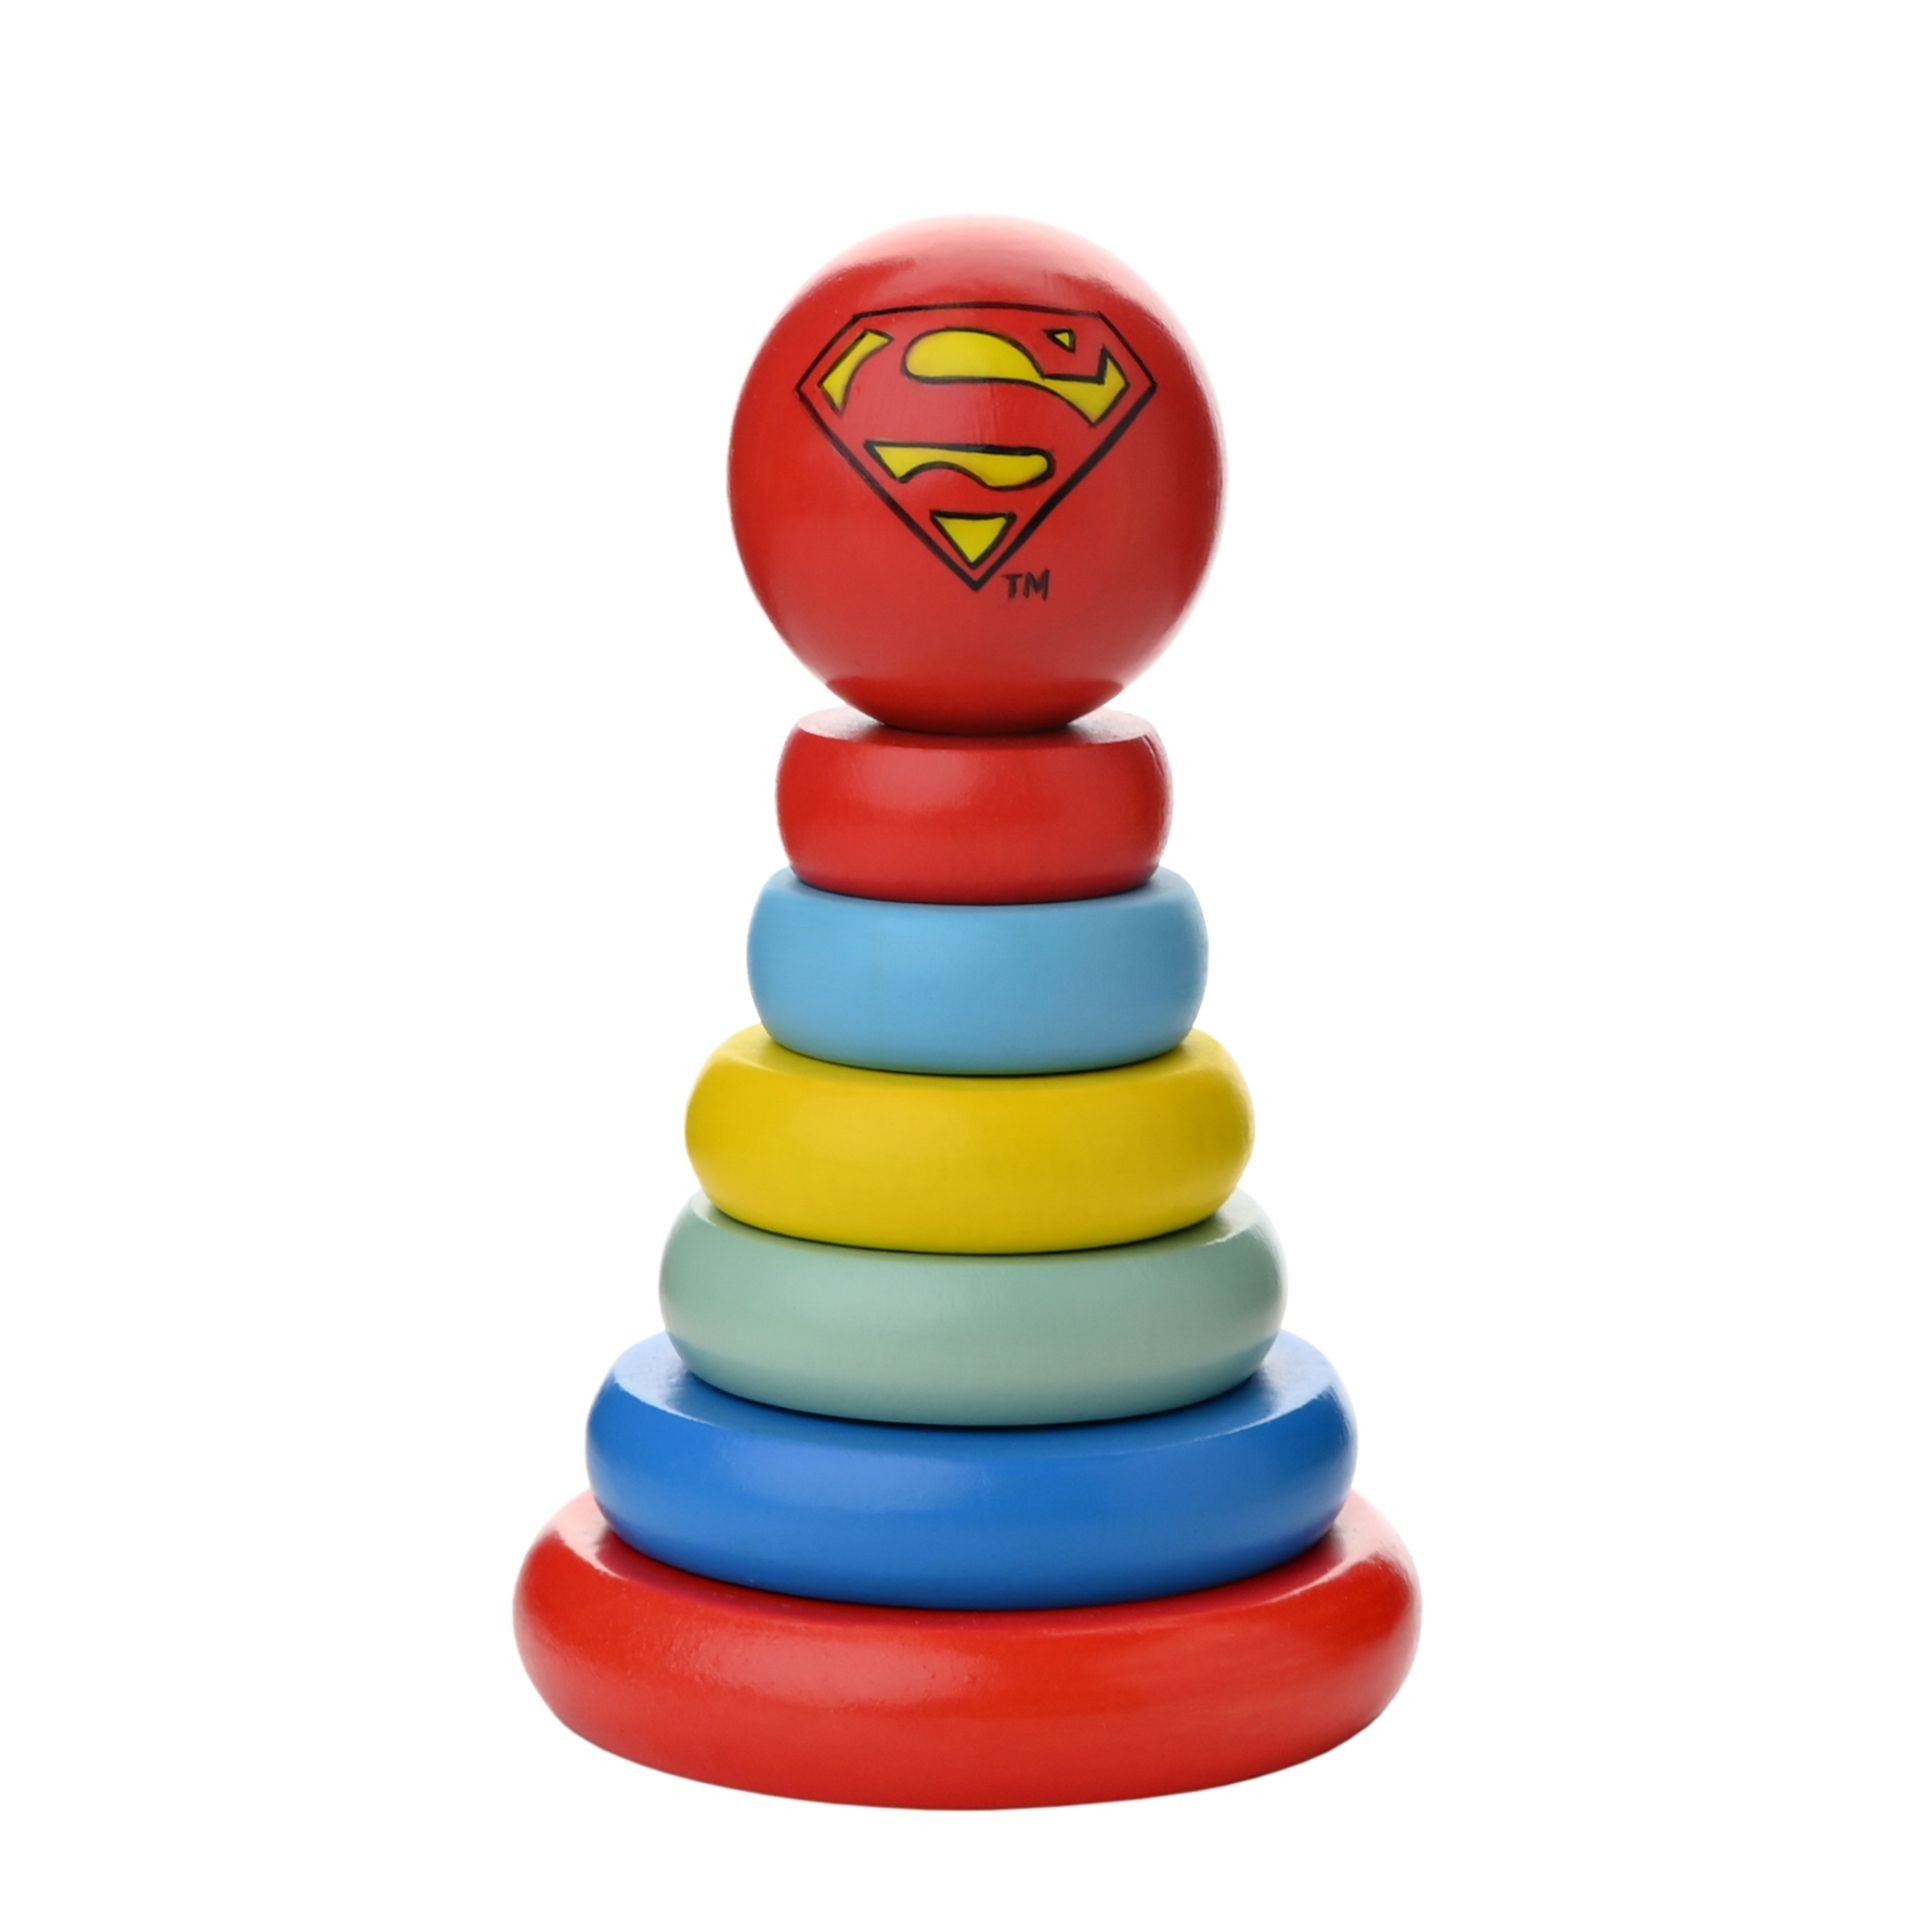 View Warner Bros Superman Wooden Stacking Toy information